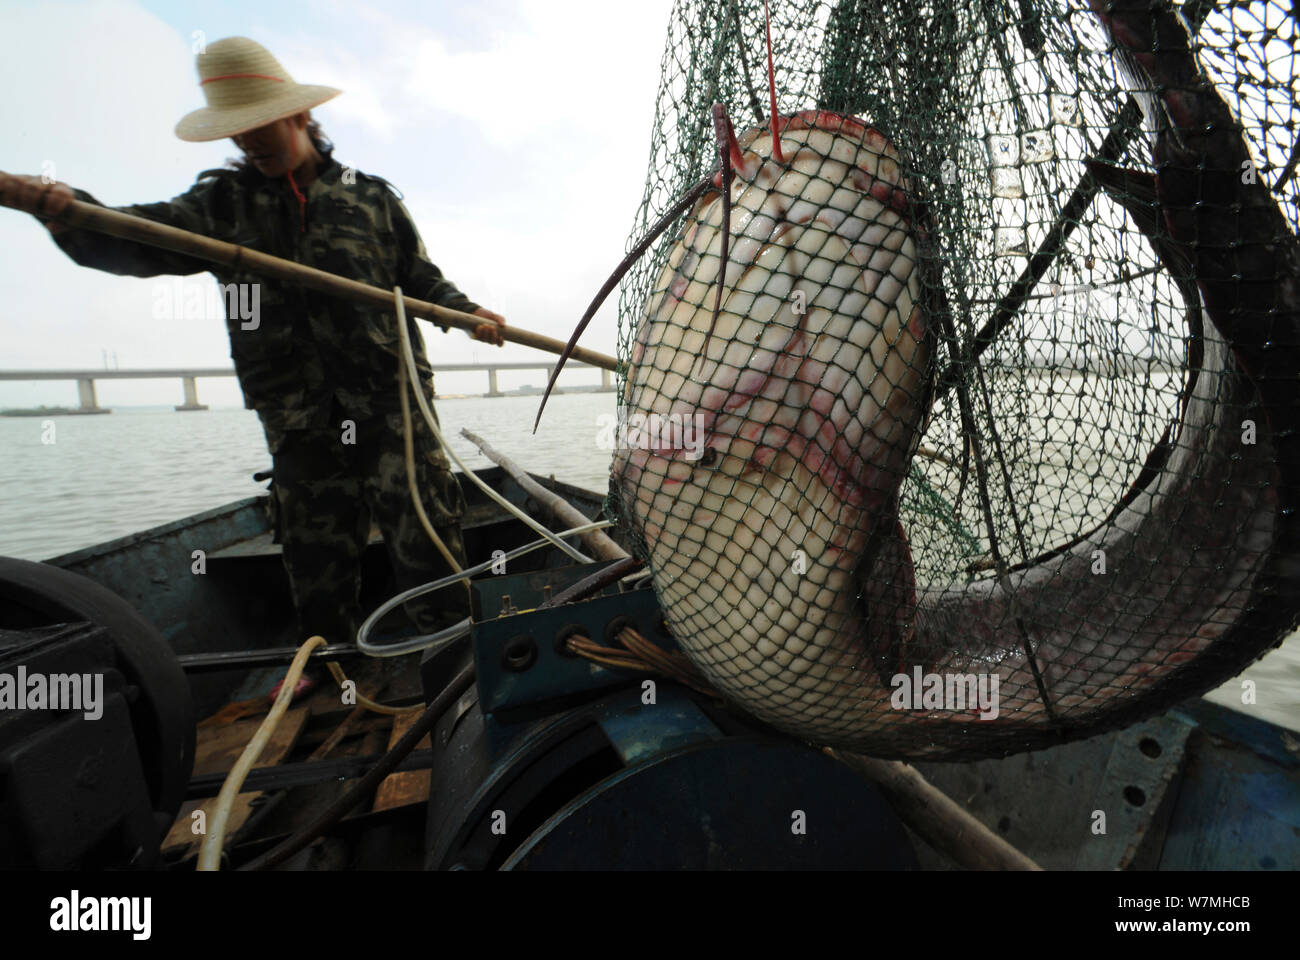 Catfish (Siluriformes) captured in net with local fisherman on boat, Hainan Island, China, January 2007. Stock Photo